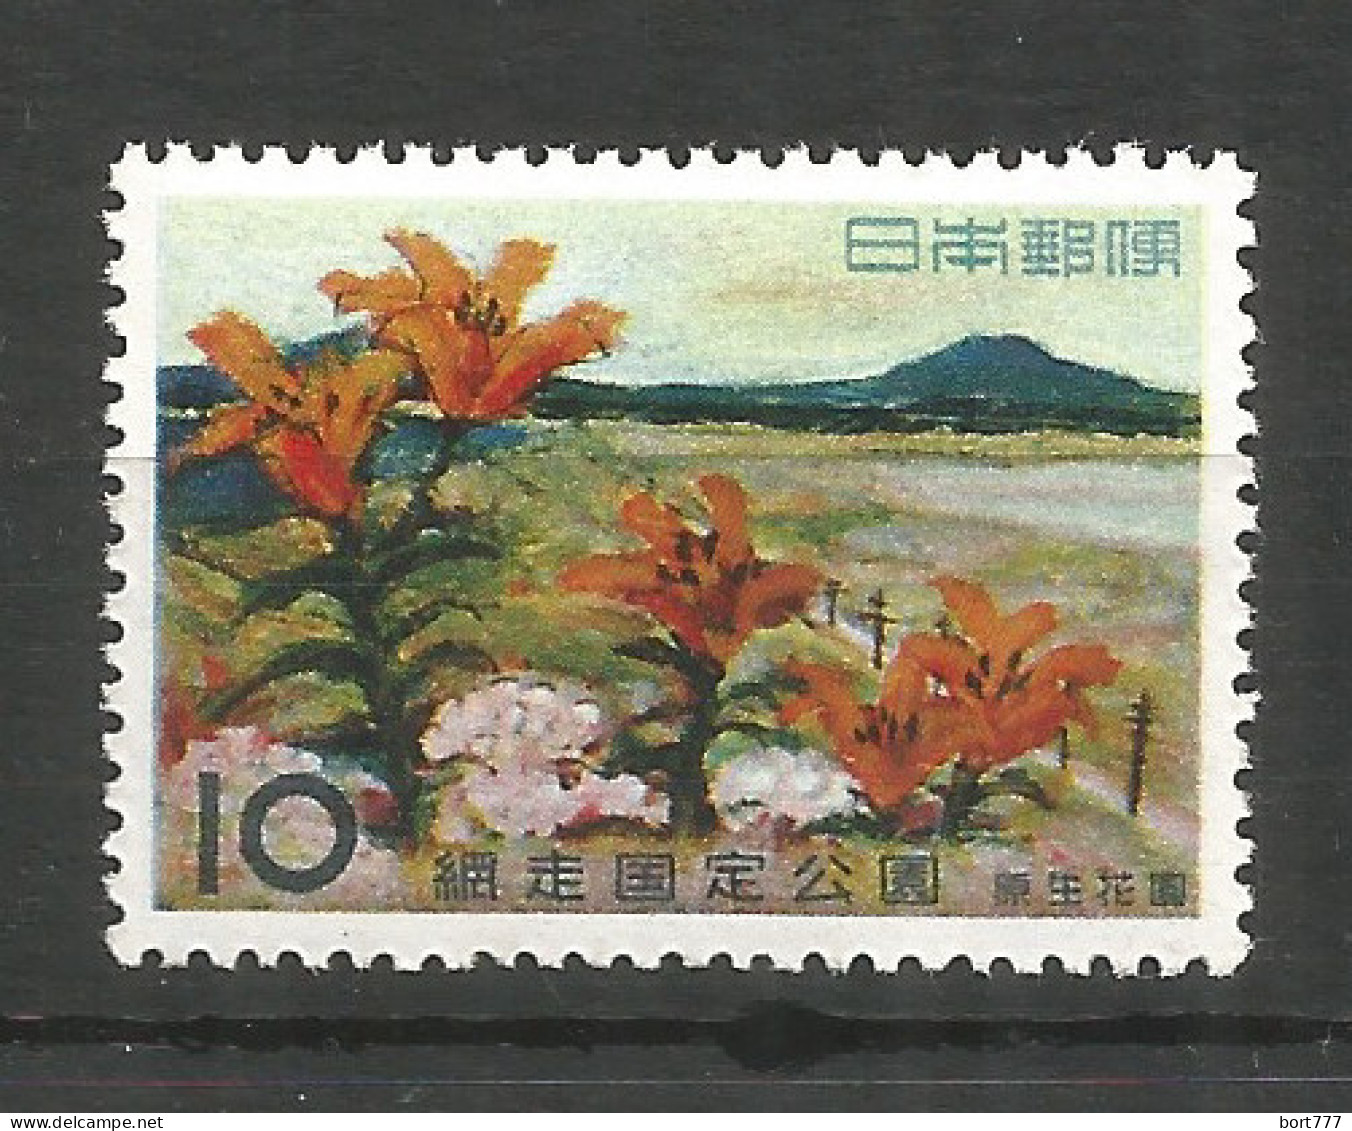 Japan 1960 Mint Stamp MNH (**) - Nuevos